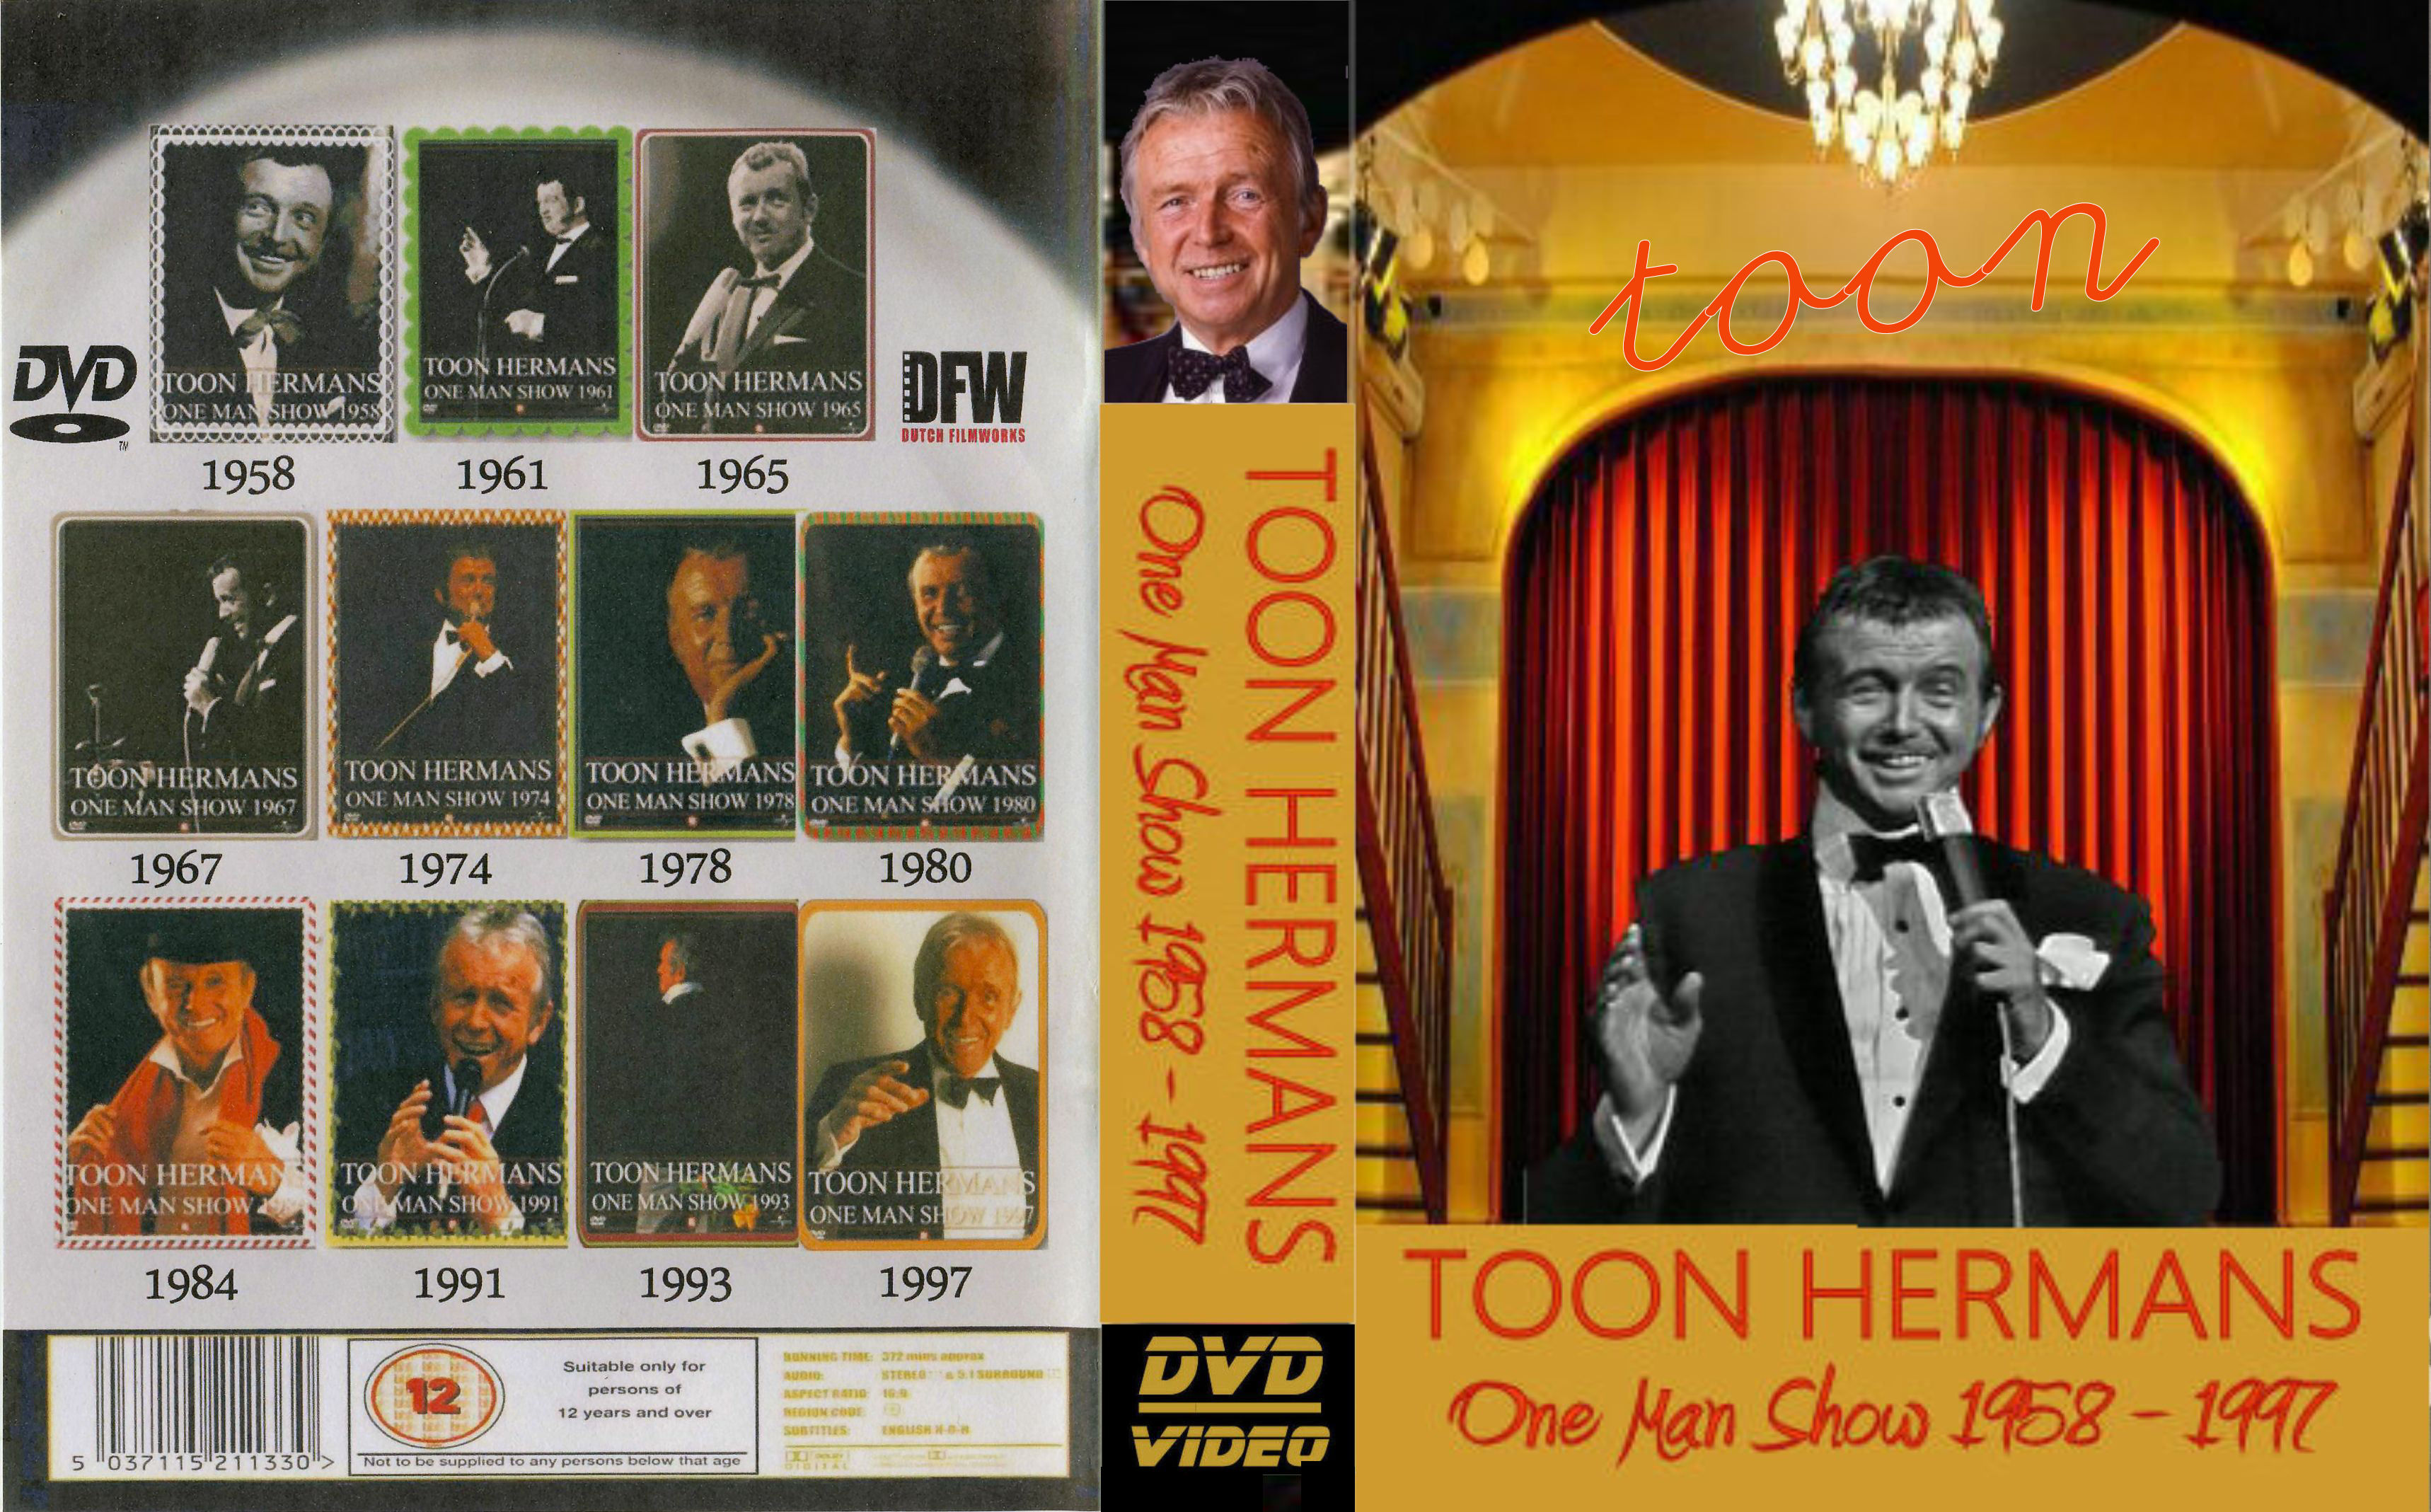 Toon Hermans One Man Show 1958 - 1997 - DvD 9 (1991)